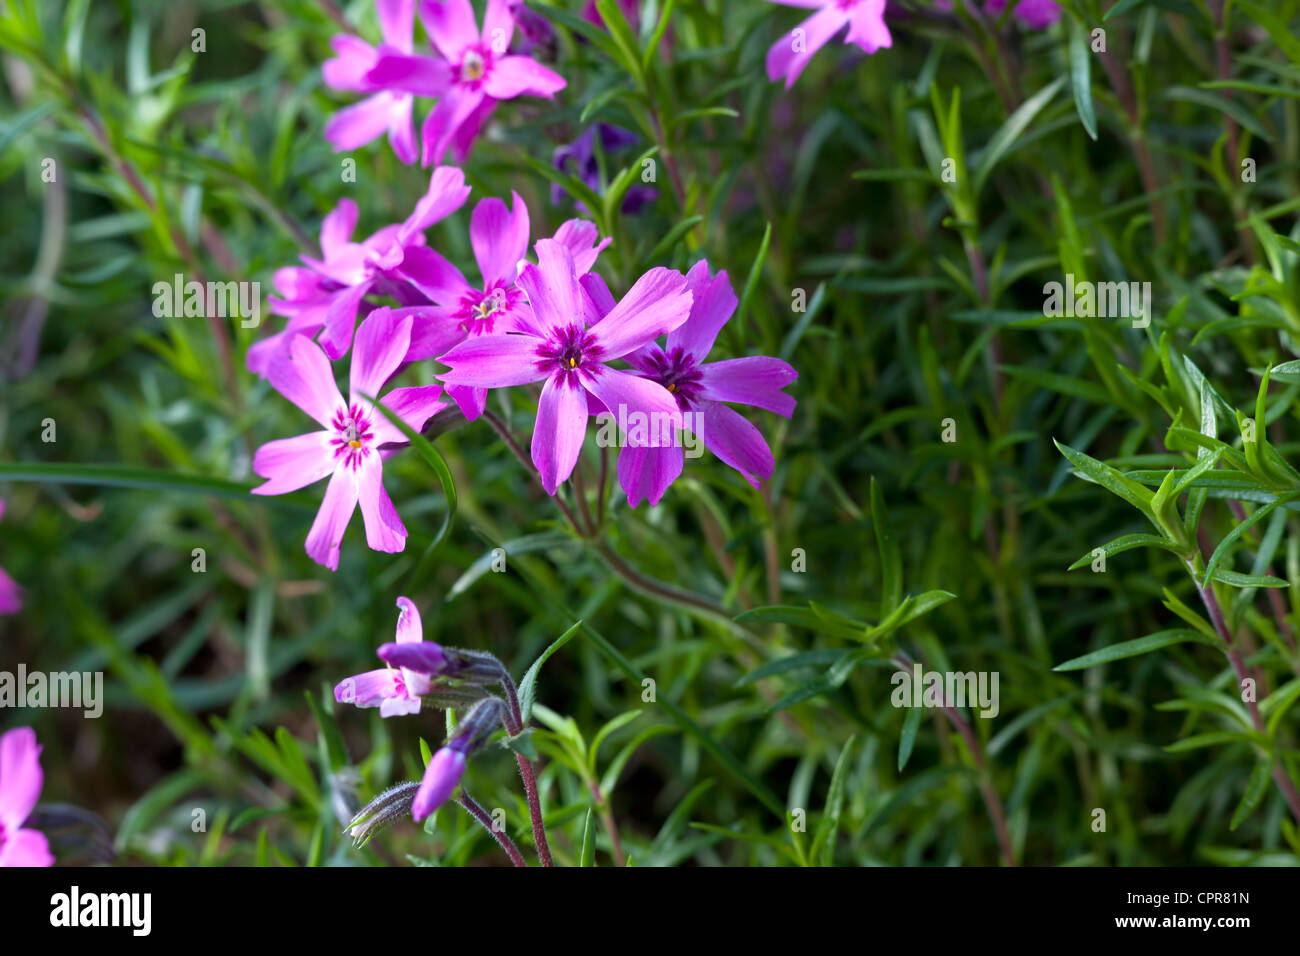 Some phlox flowers. Stock Photo